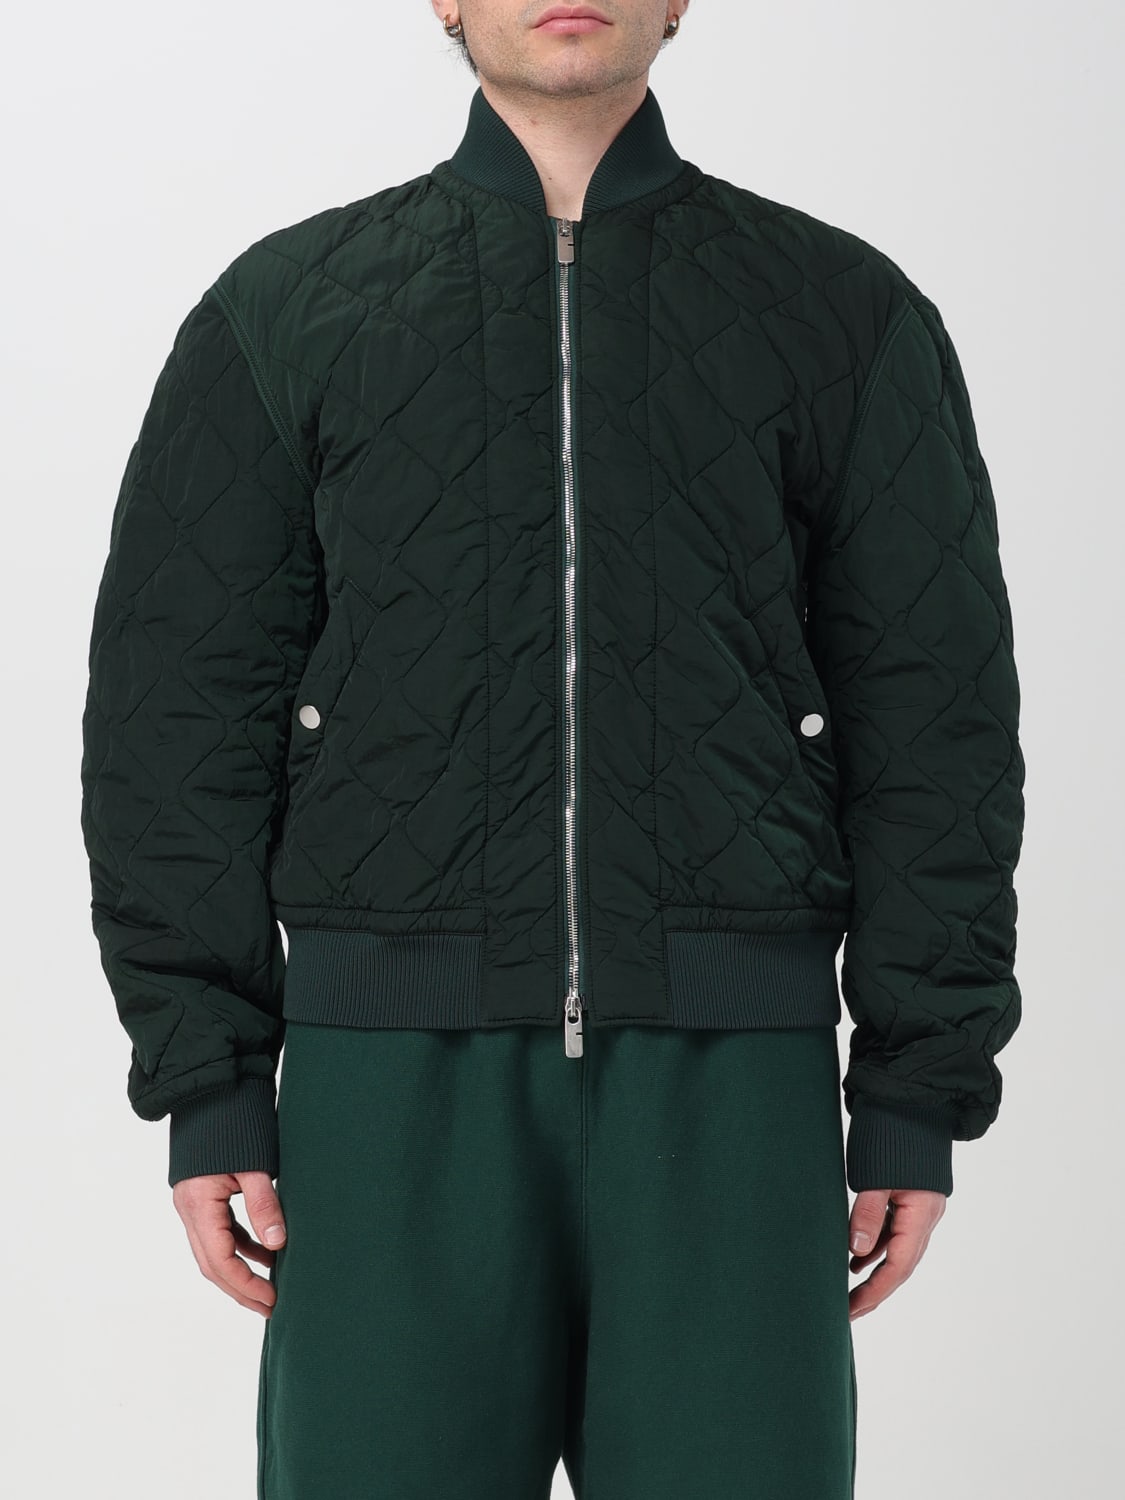 BURBERRY: Jacket men - Forest Green | BURBERRY jacket 8083809 online at ...